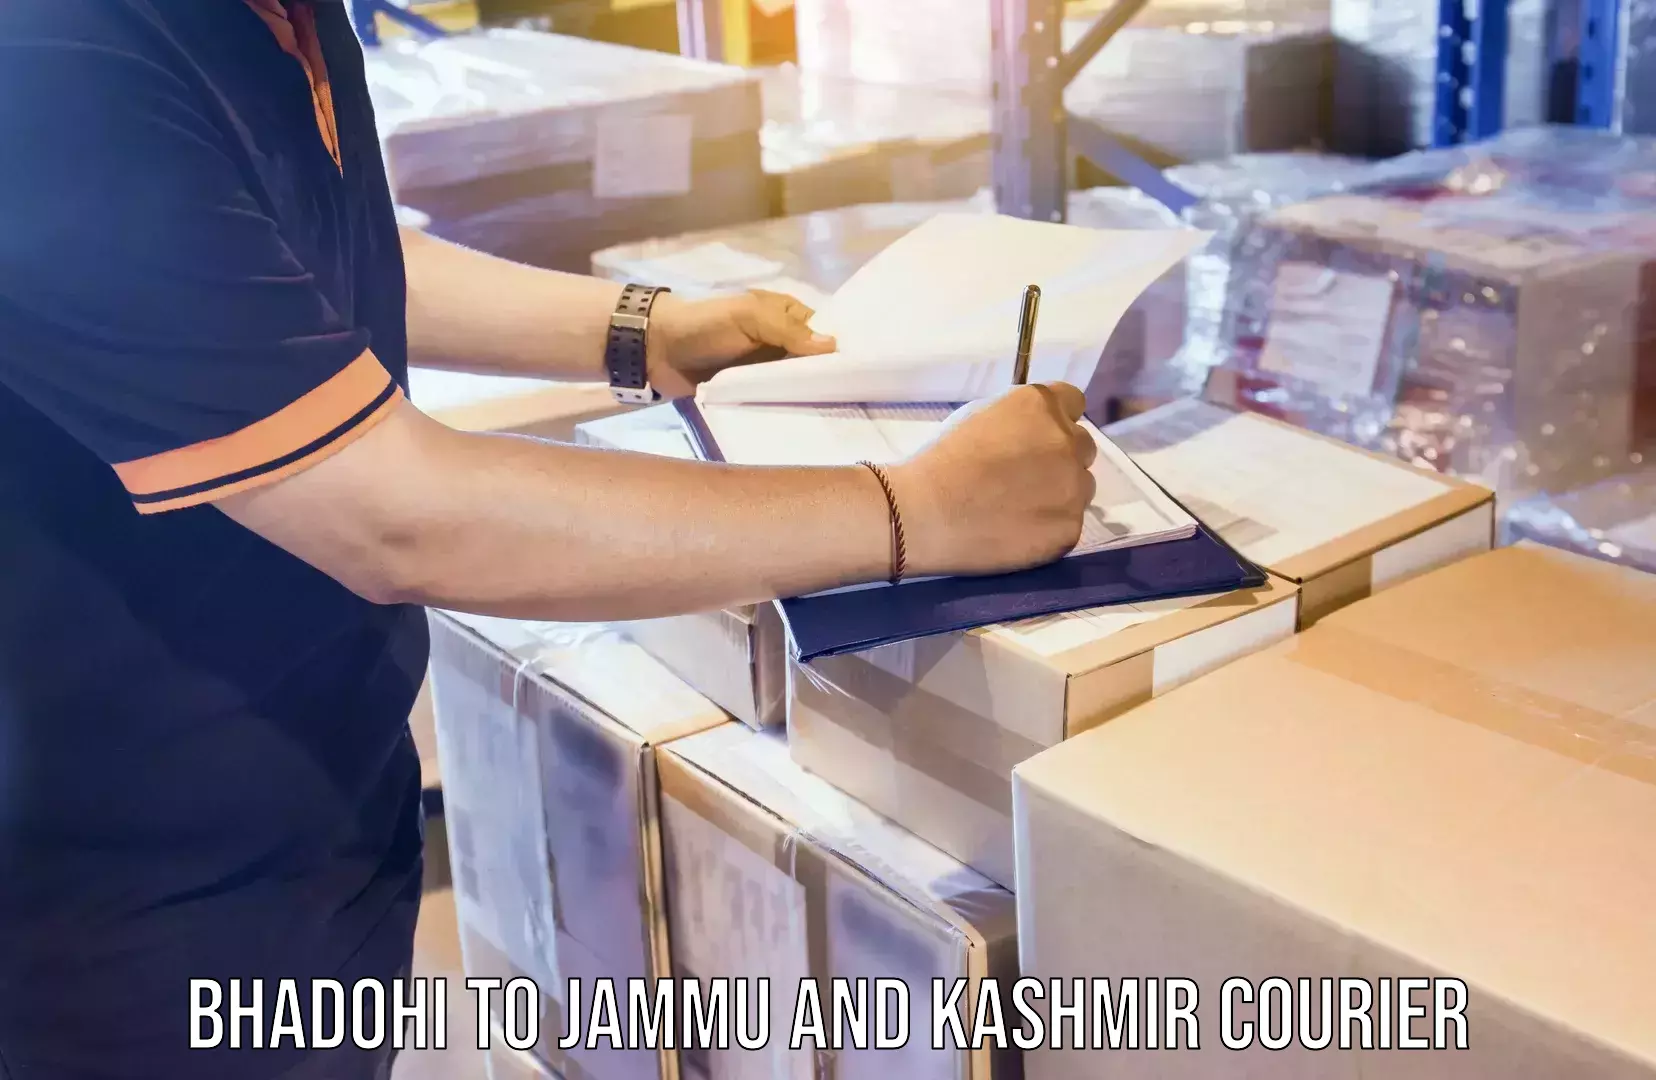 Global logistics network Bhadohi to Jammu and Kashmir